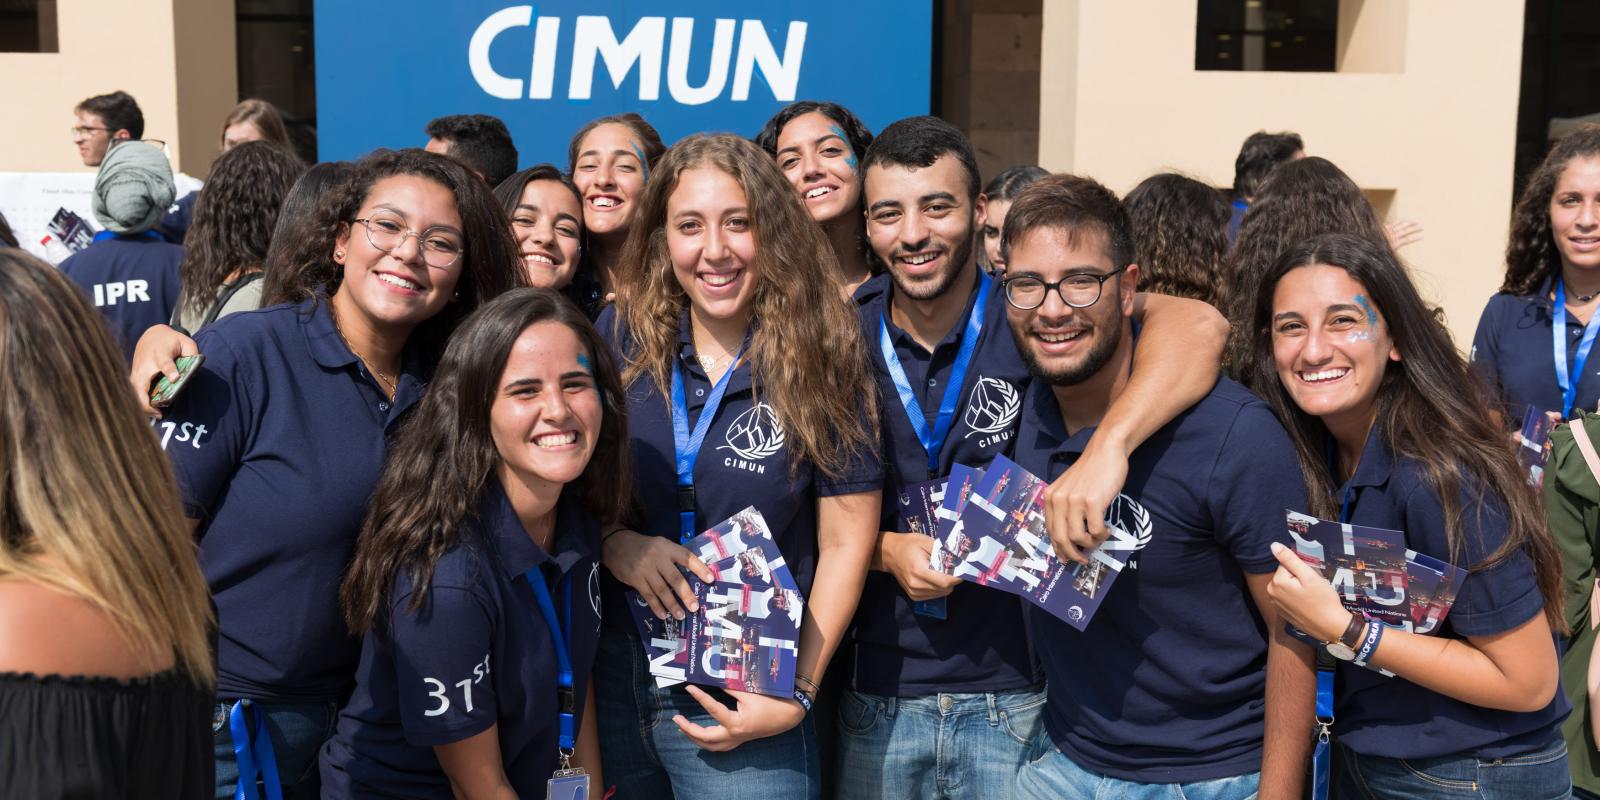 CIMUN students